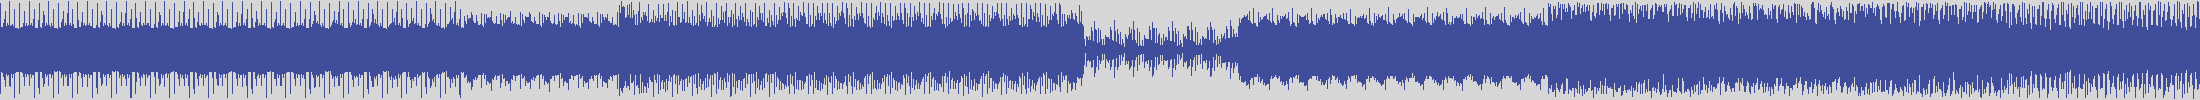 nf_boyz_records [NFY019] Elia Mosse - Slowly [Micro House Edit] audio wave form